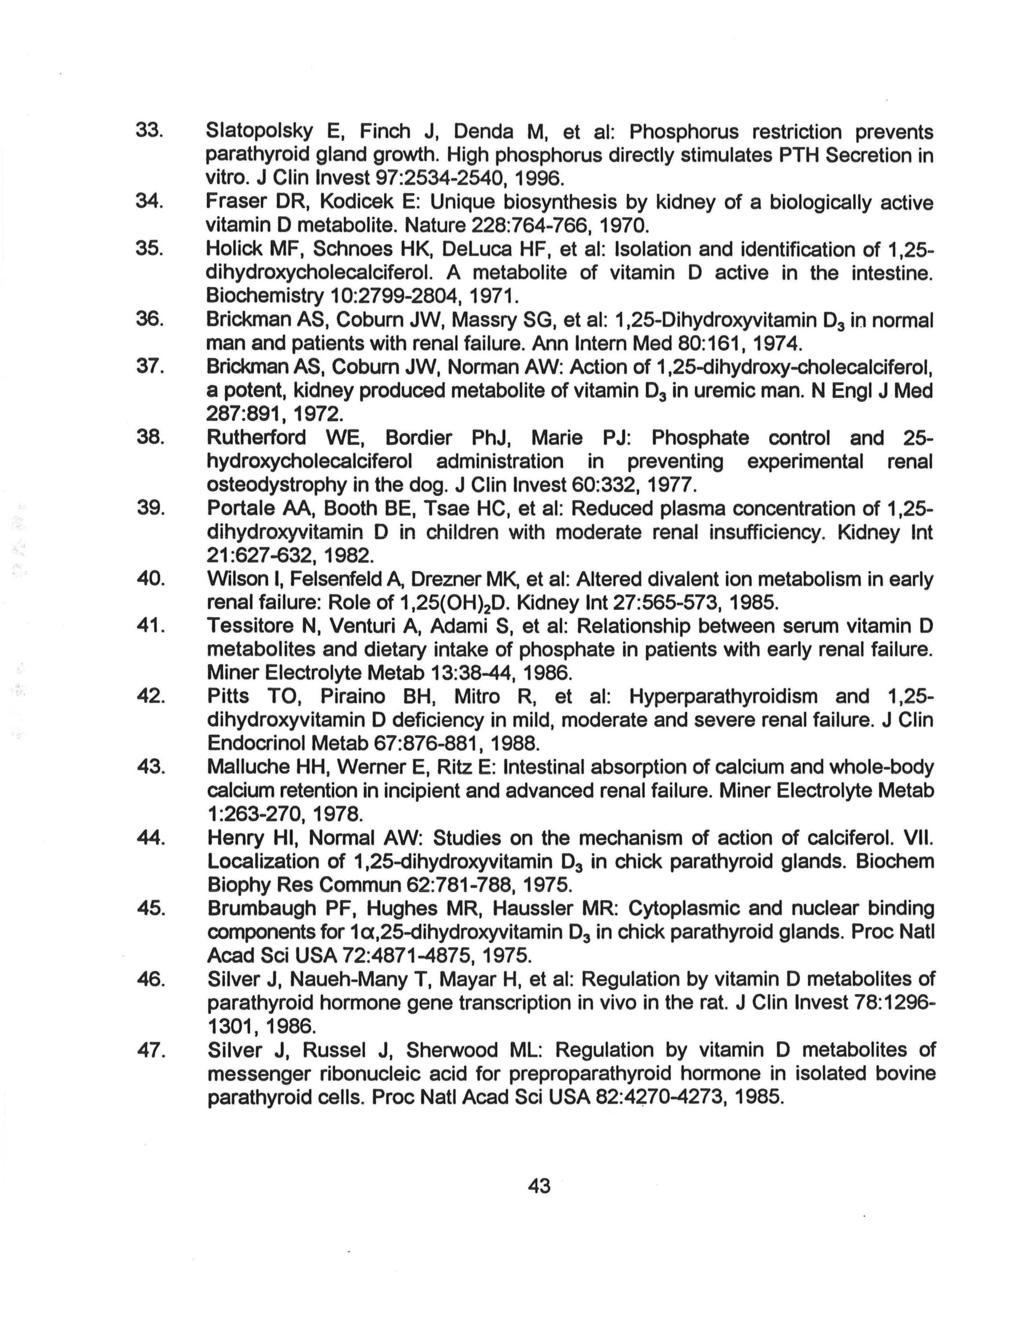 33. Slatopolsky E, Finch J, Denda M, et al: Phosphorus restriction prevents parathyroid gland growth. High phosphorus directly stimulates PTH Secretion in vitro. J Clin Invest 97:2534-2540, 1996. 34.